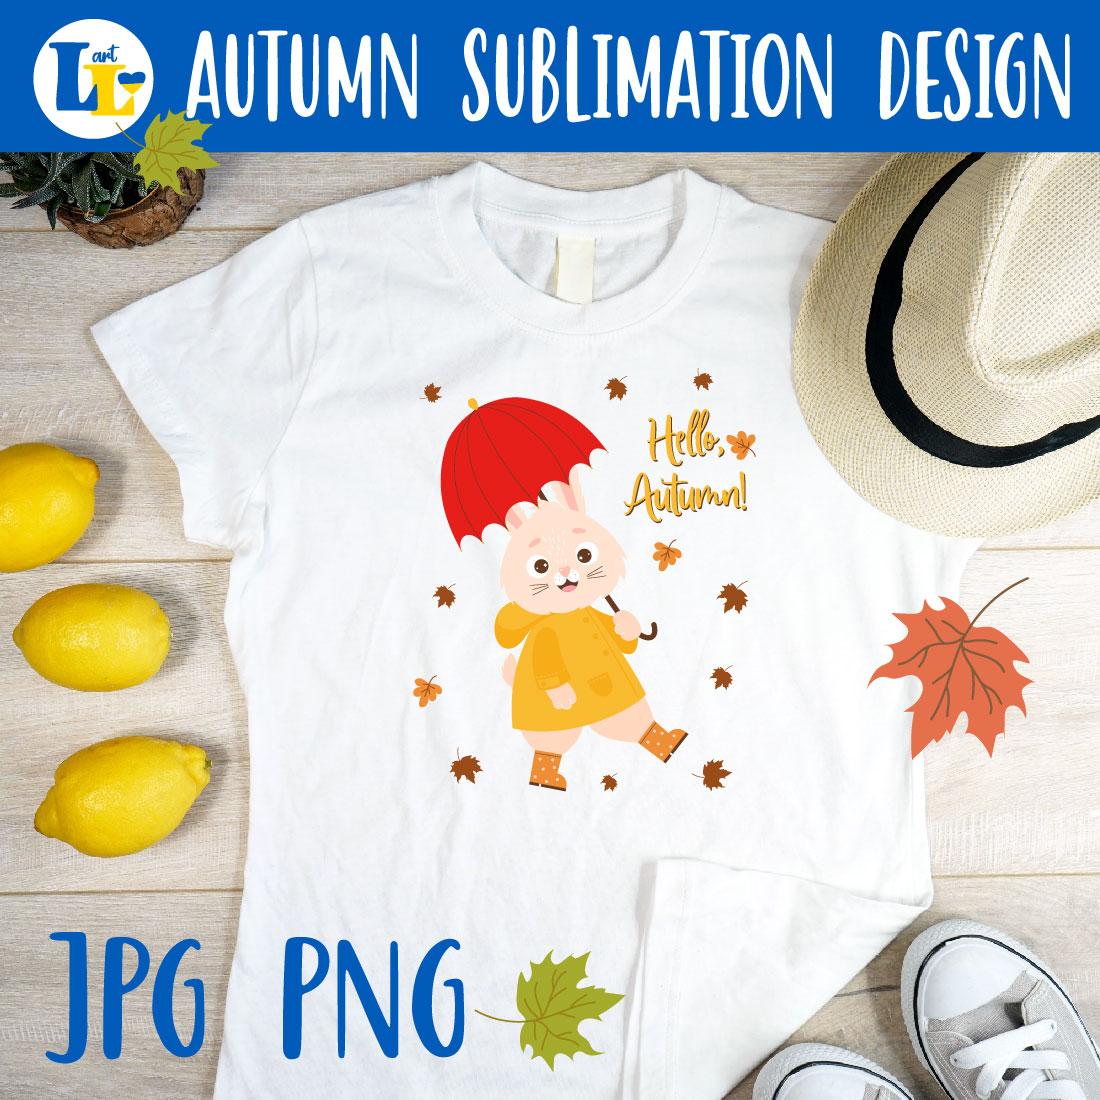 Сute Fall Rabbit Autumn Sublimation Design cover image.